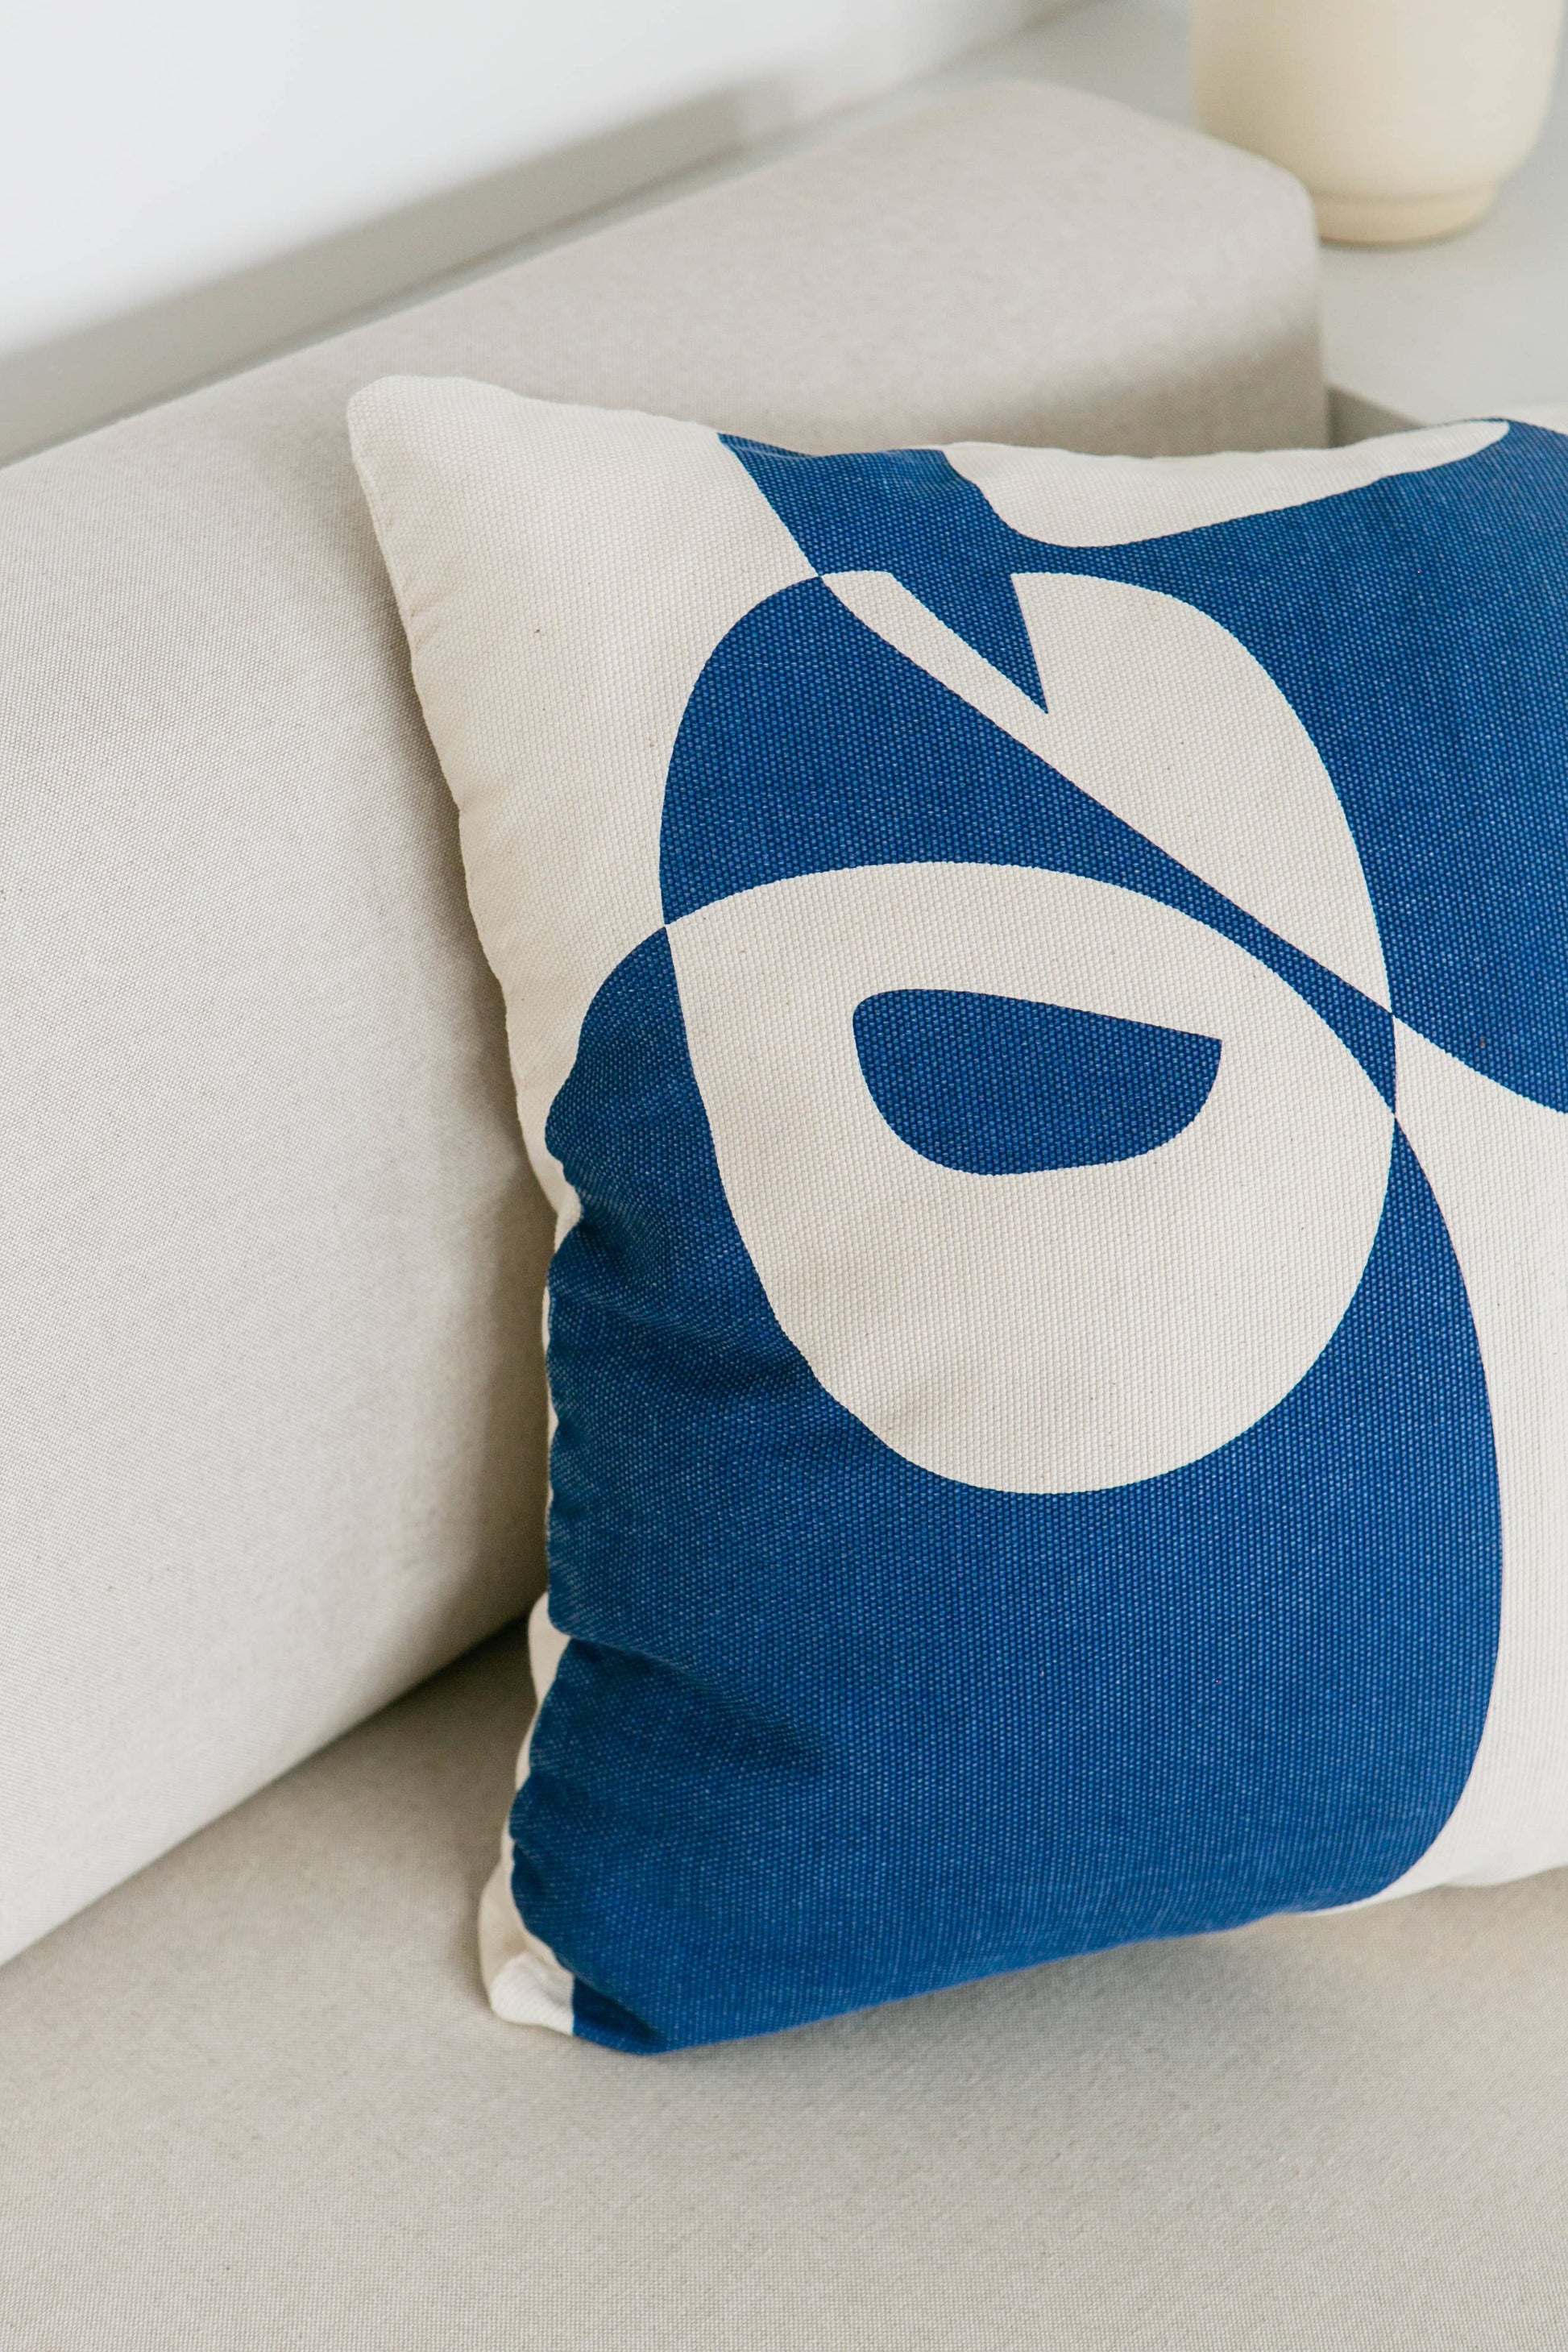 modern drawn blue and white pillow 